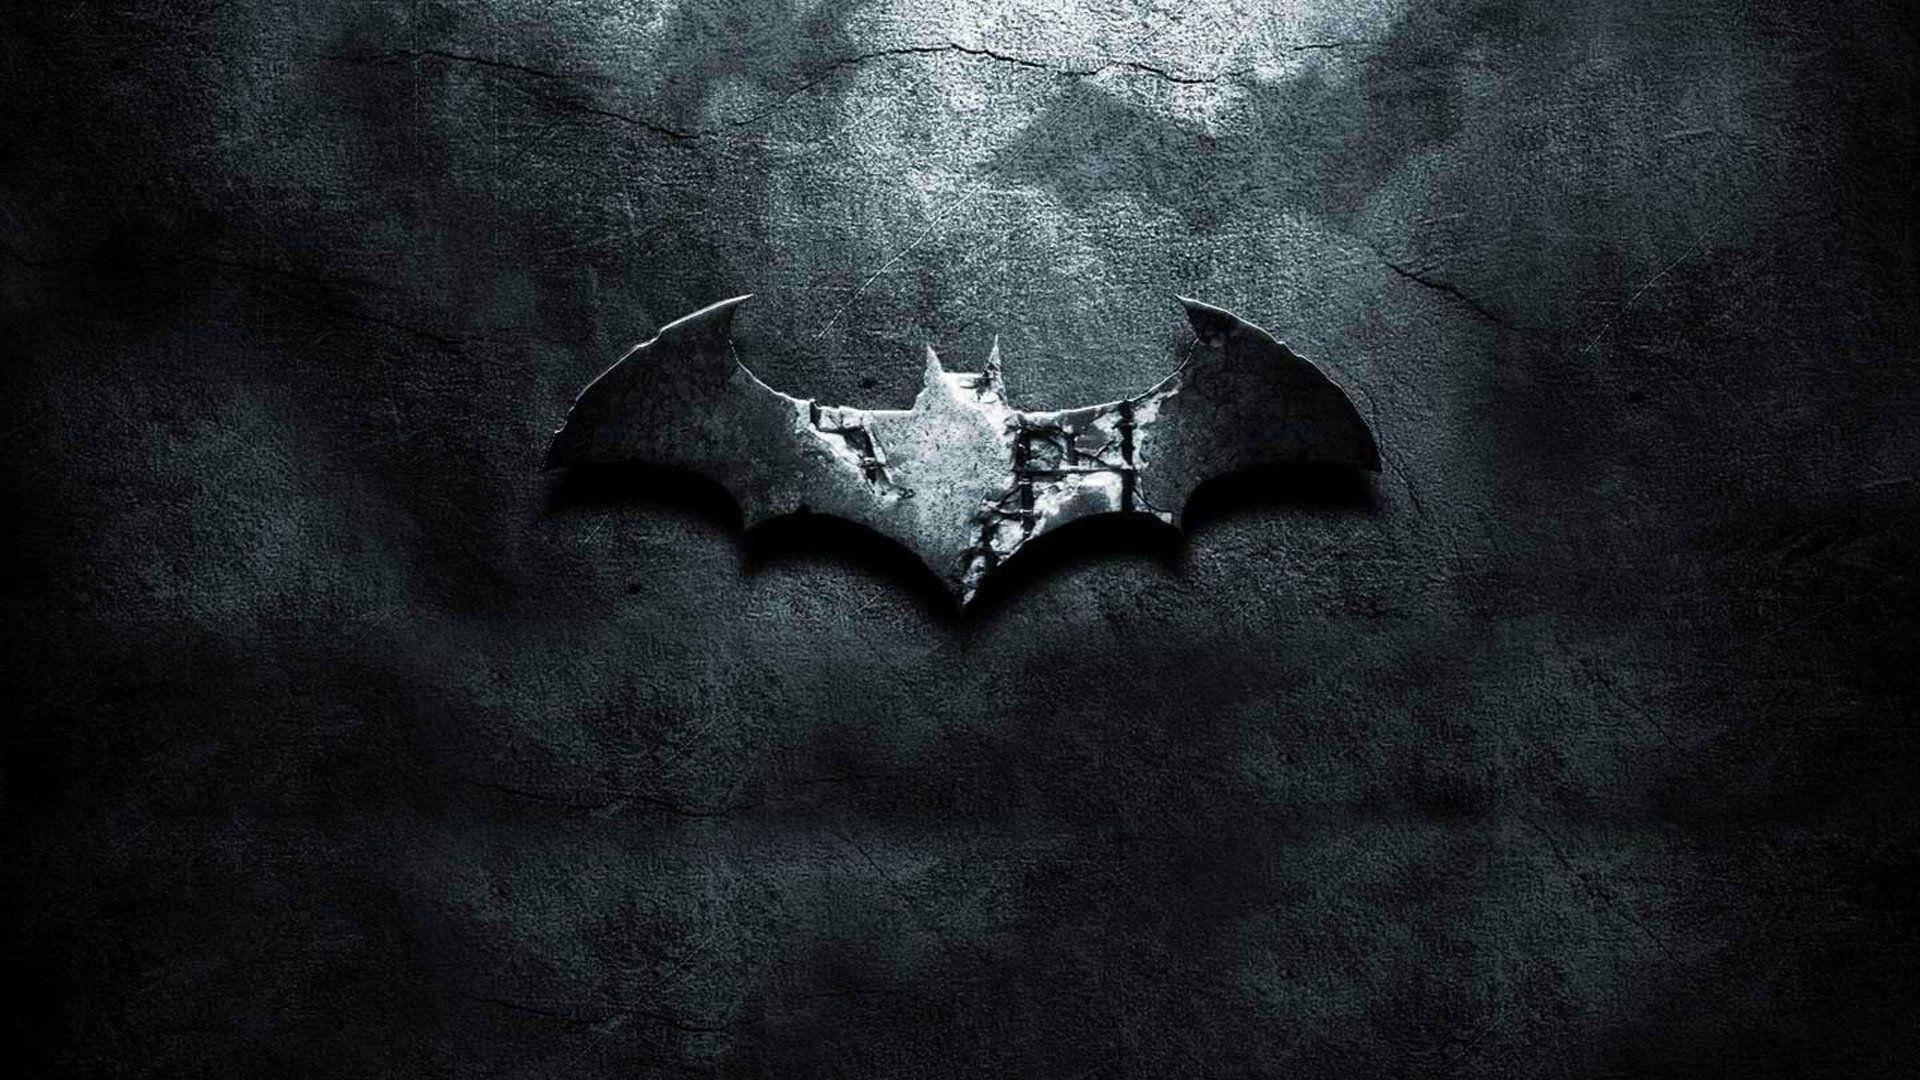 1920X1080 Batman Wallpaper and Background